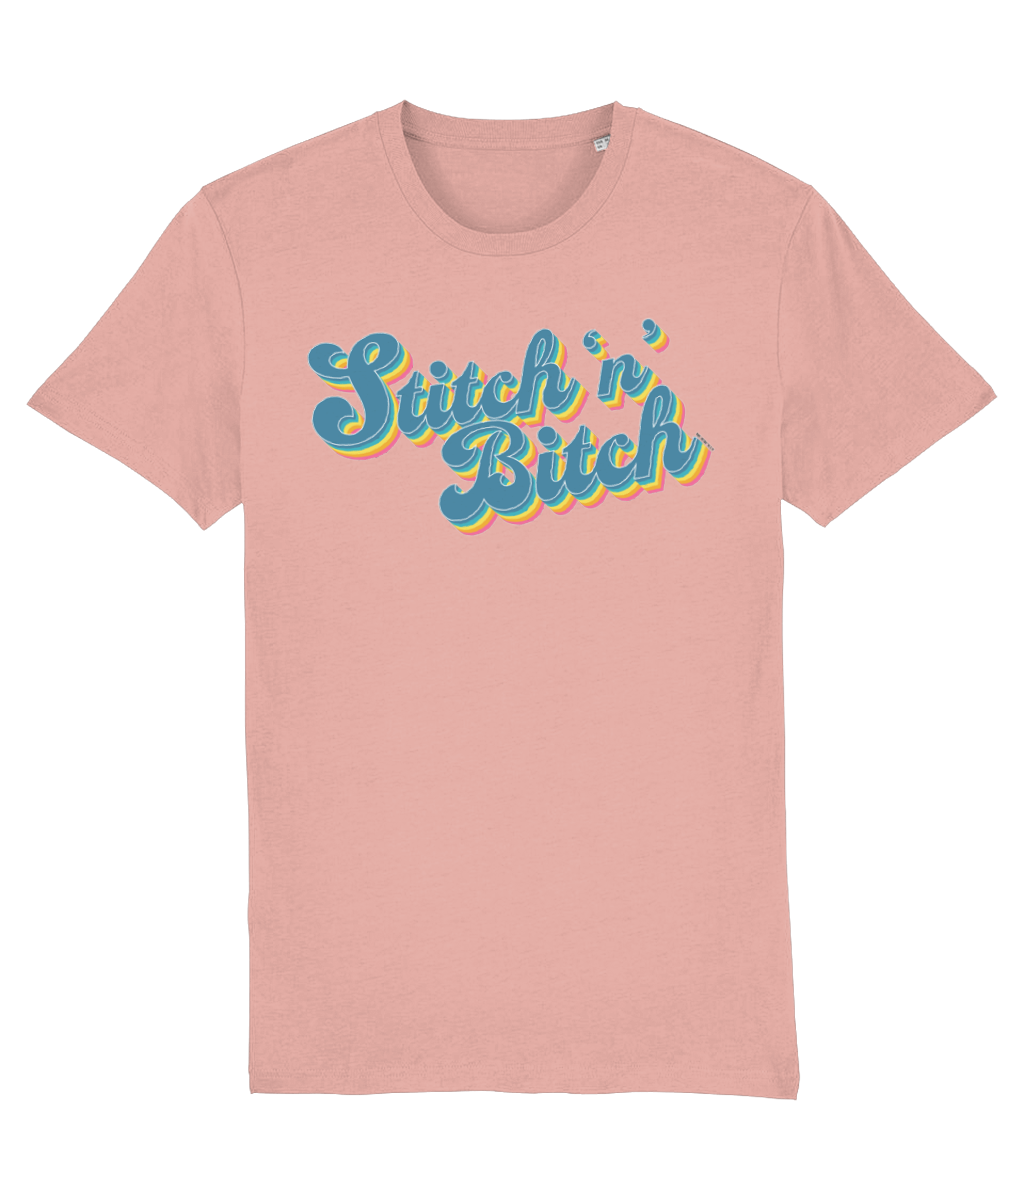 Stitch ‘n’ Bitch